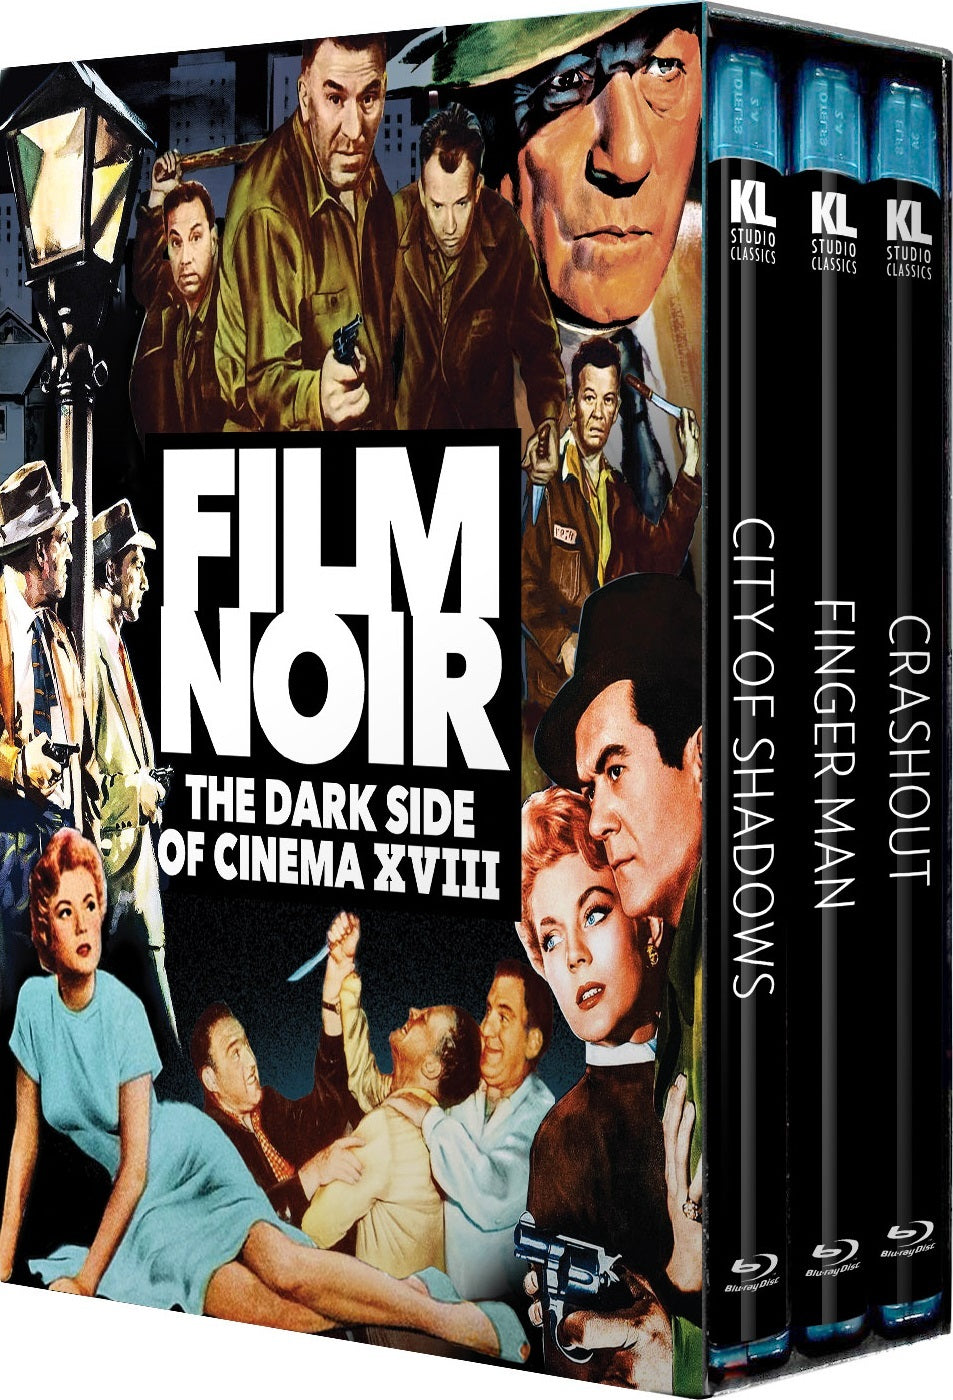 FILM NOIR: THE DARK SIDE OF CINEMA XVIII BLU-RAY